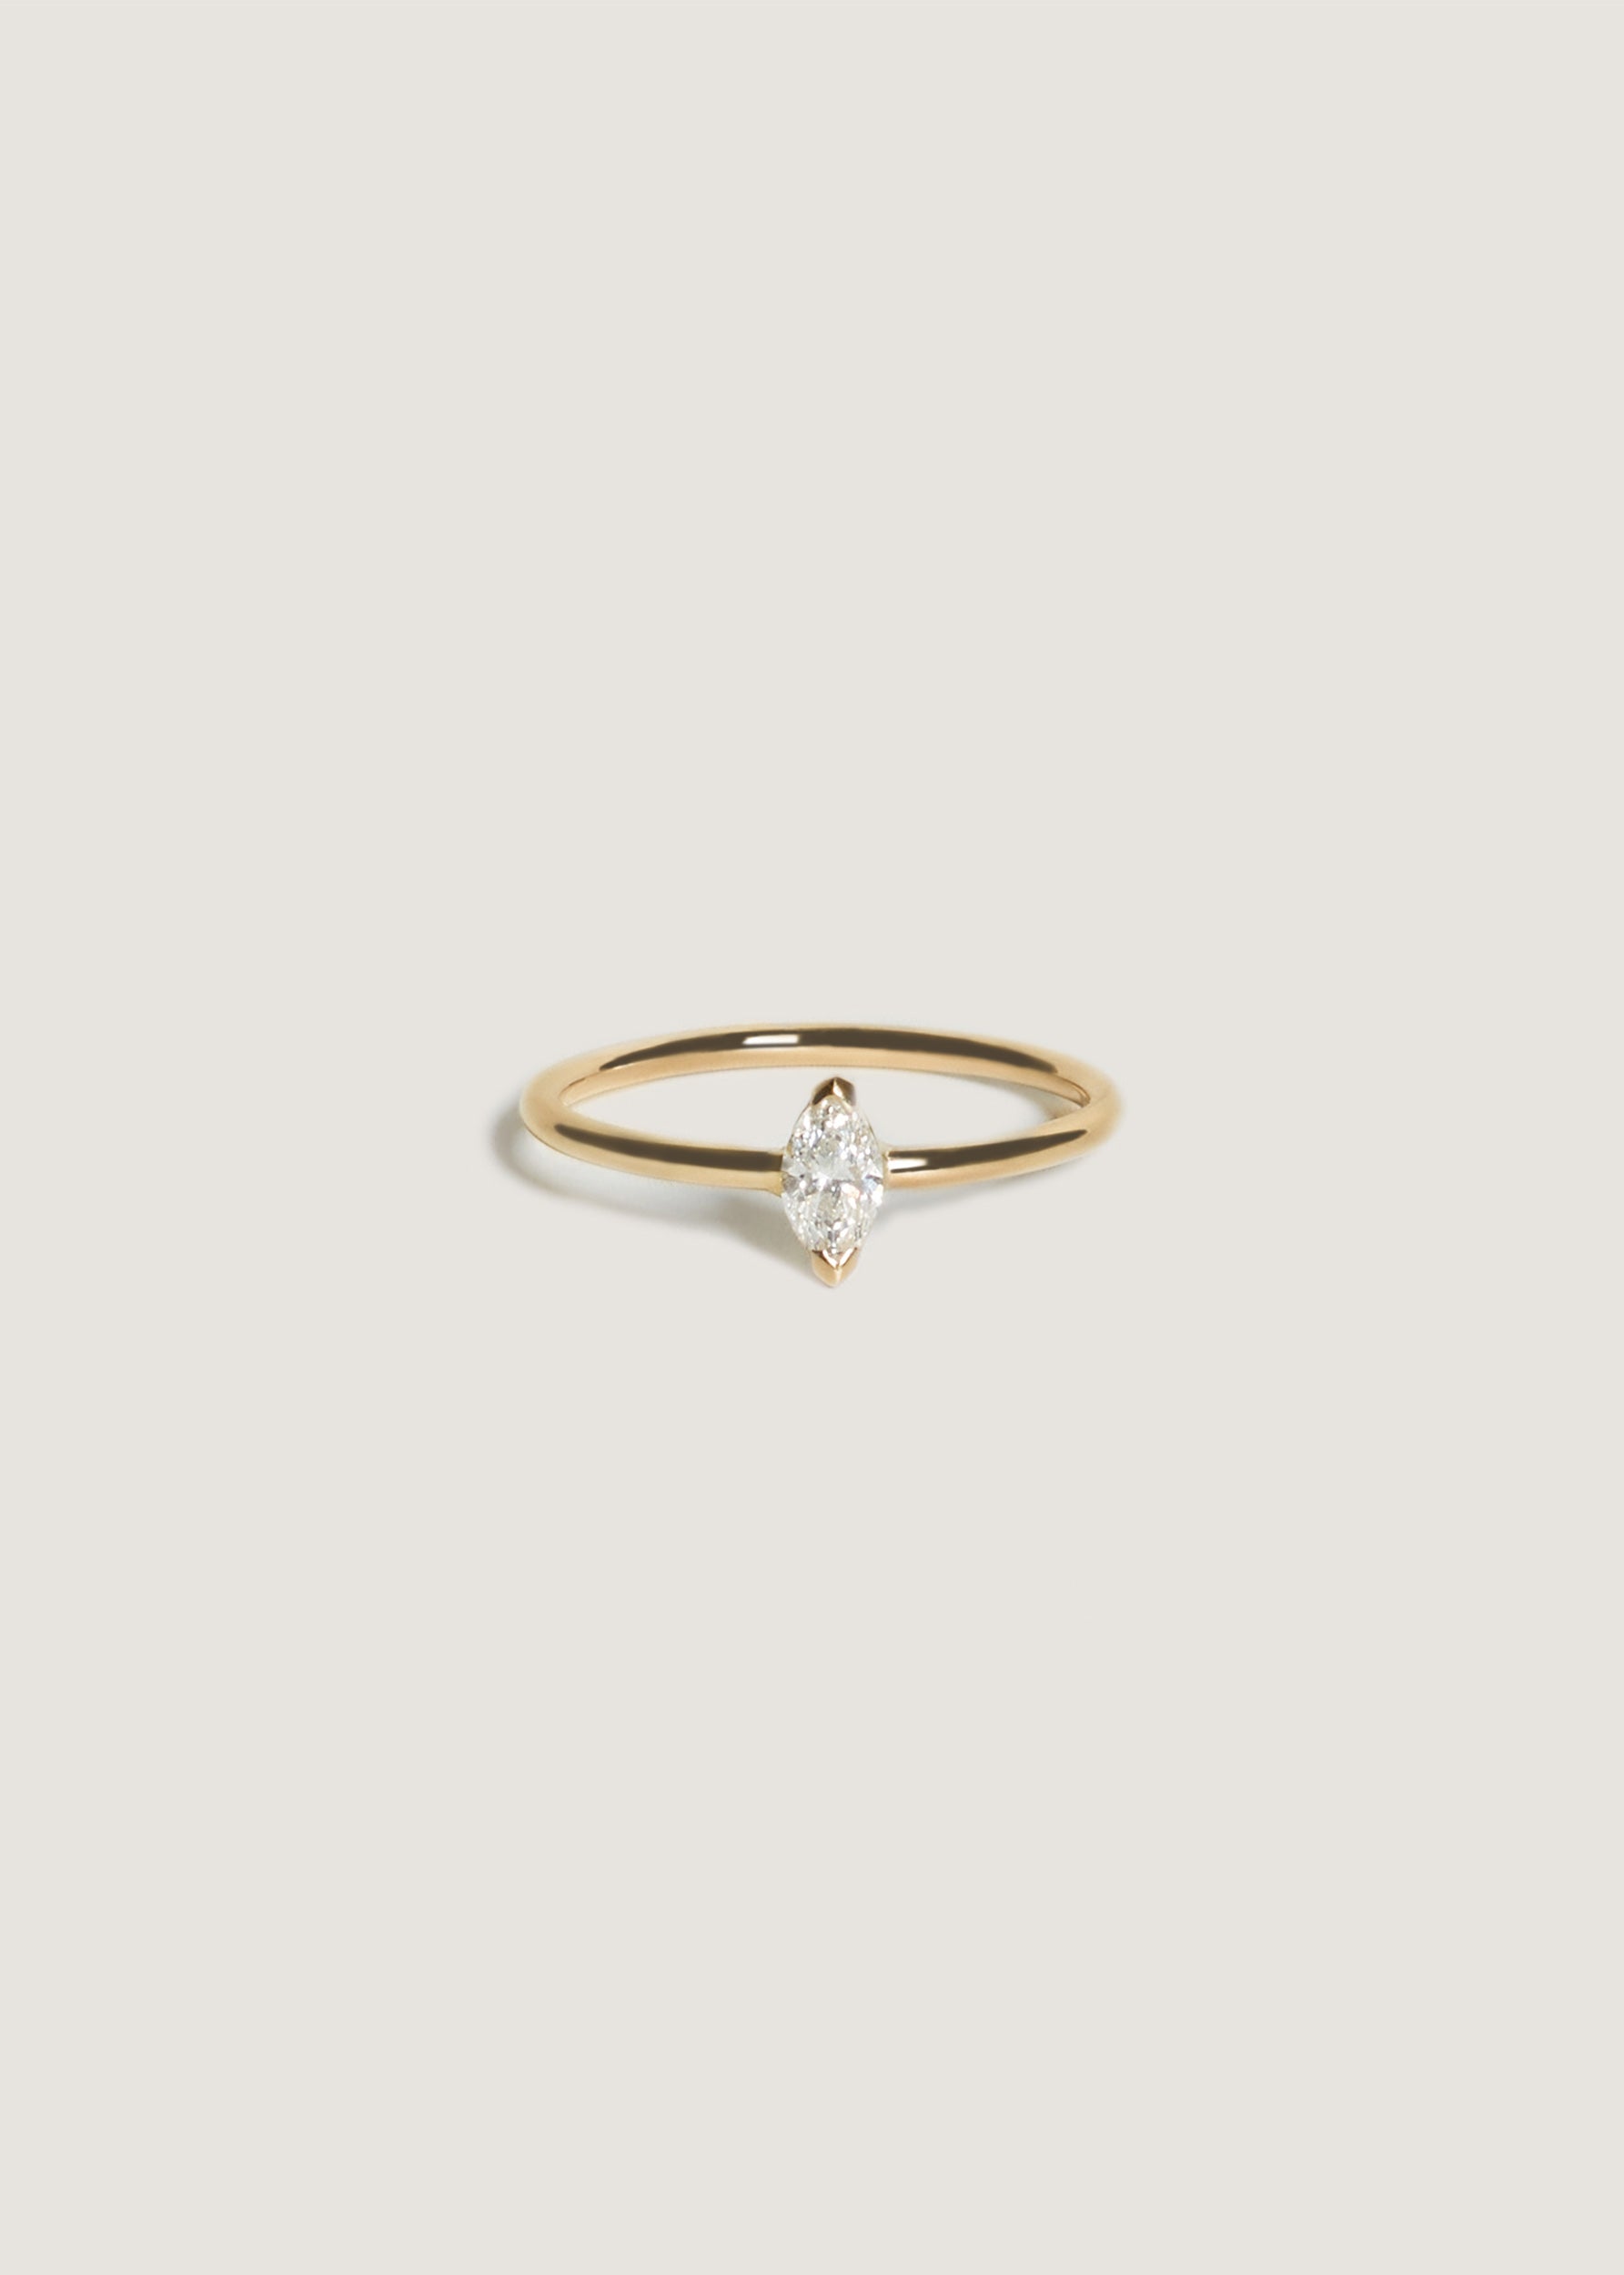 alt="Marquise Diamond Ring"